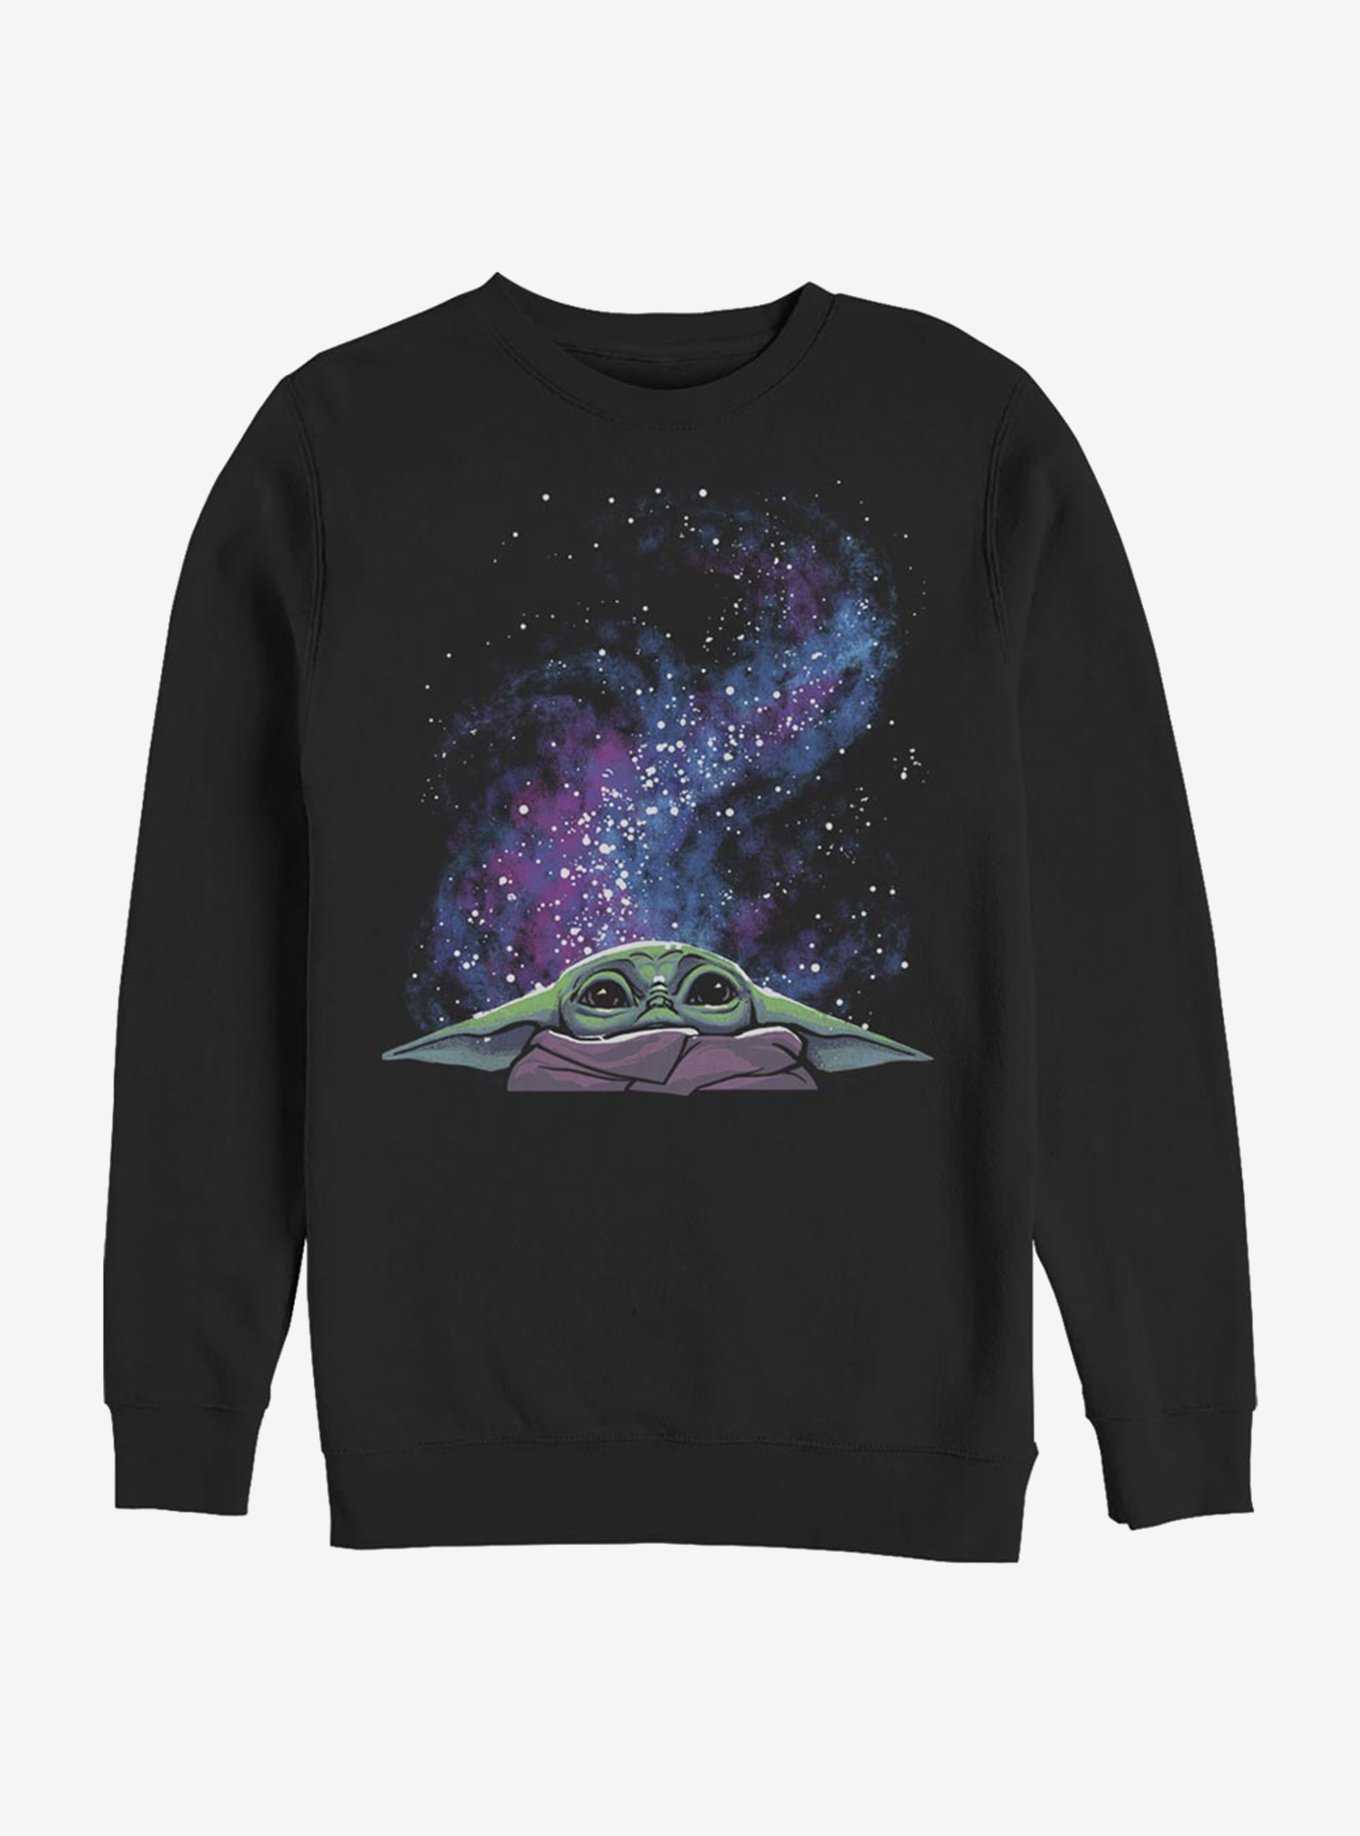 Star Wars The Mandalorian The Child Galaxy Peak Sweatshirt, , hi-res